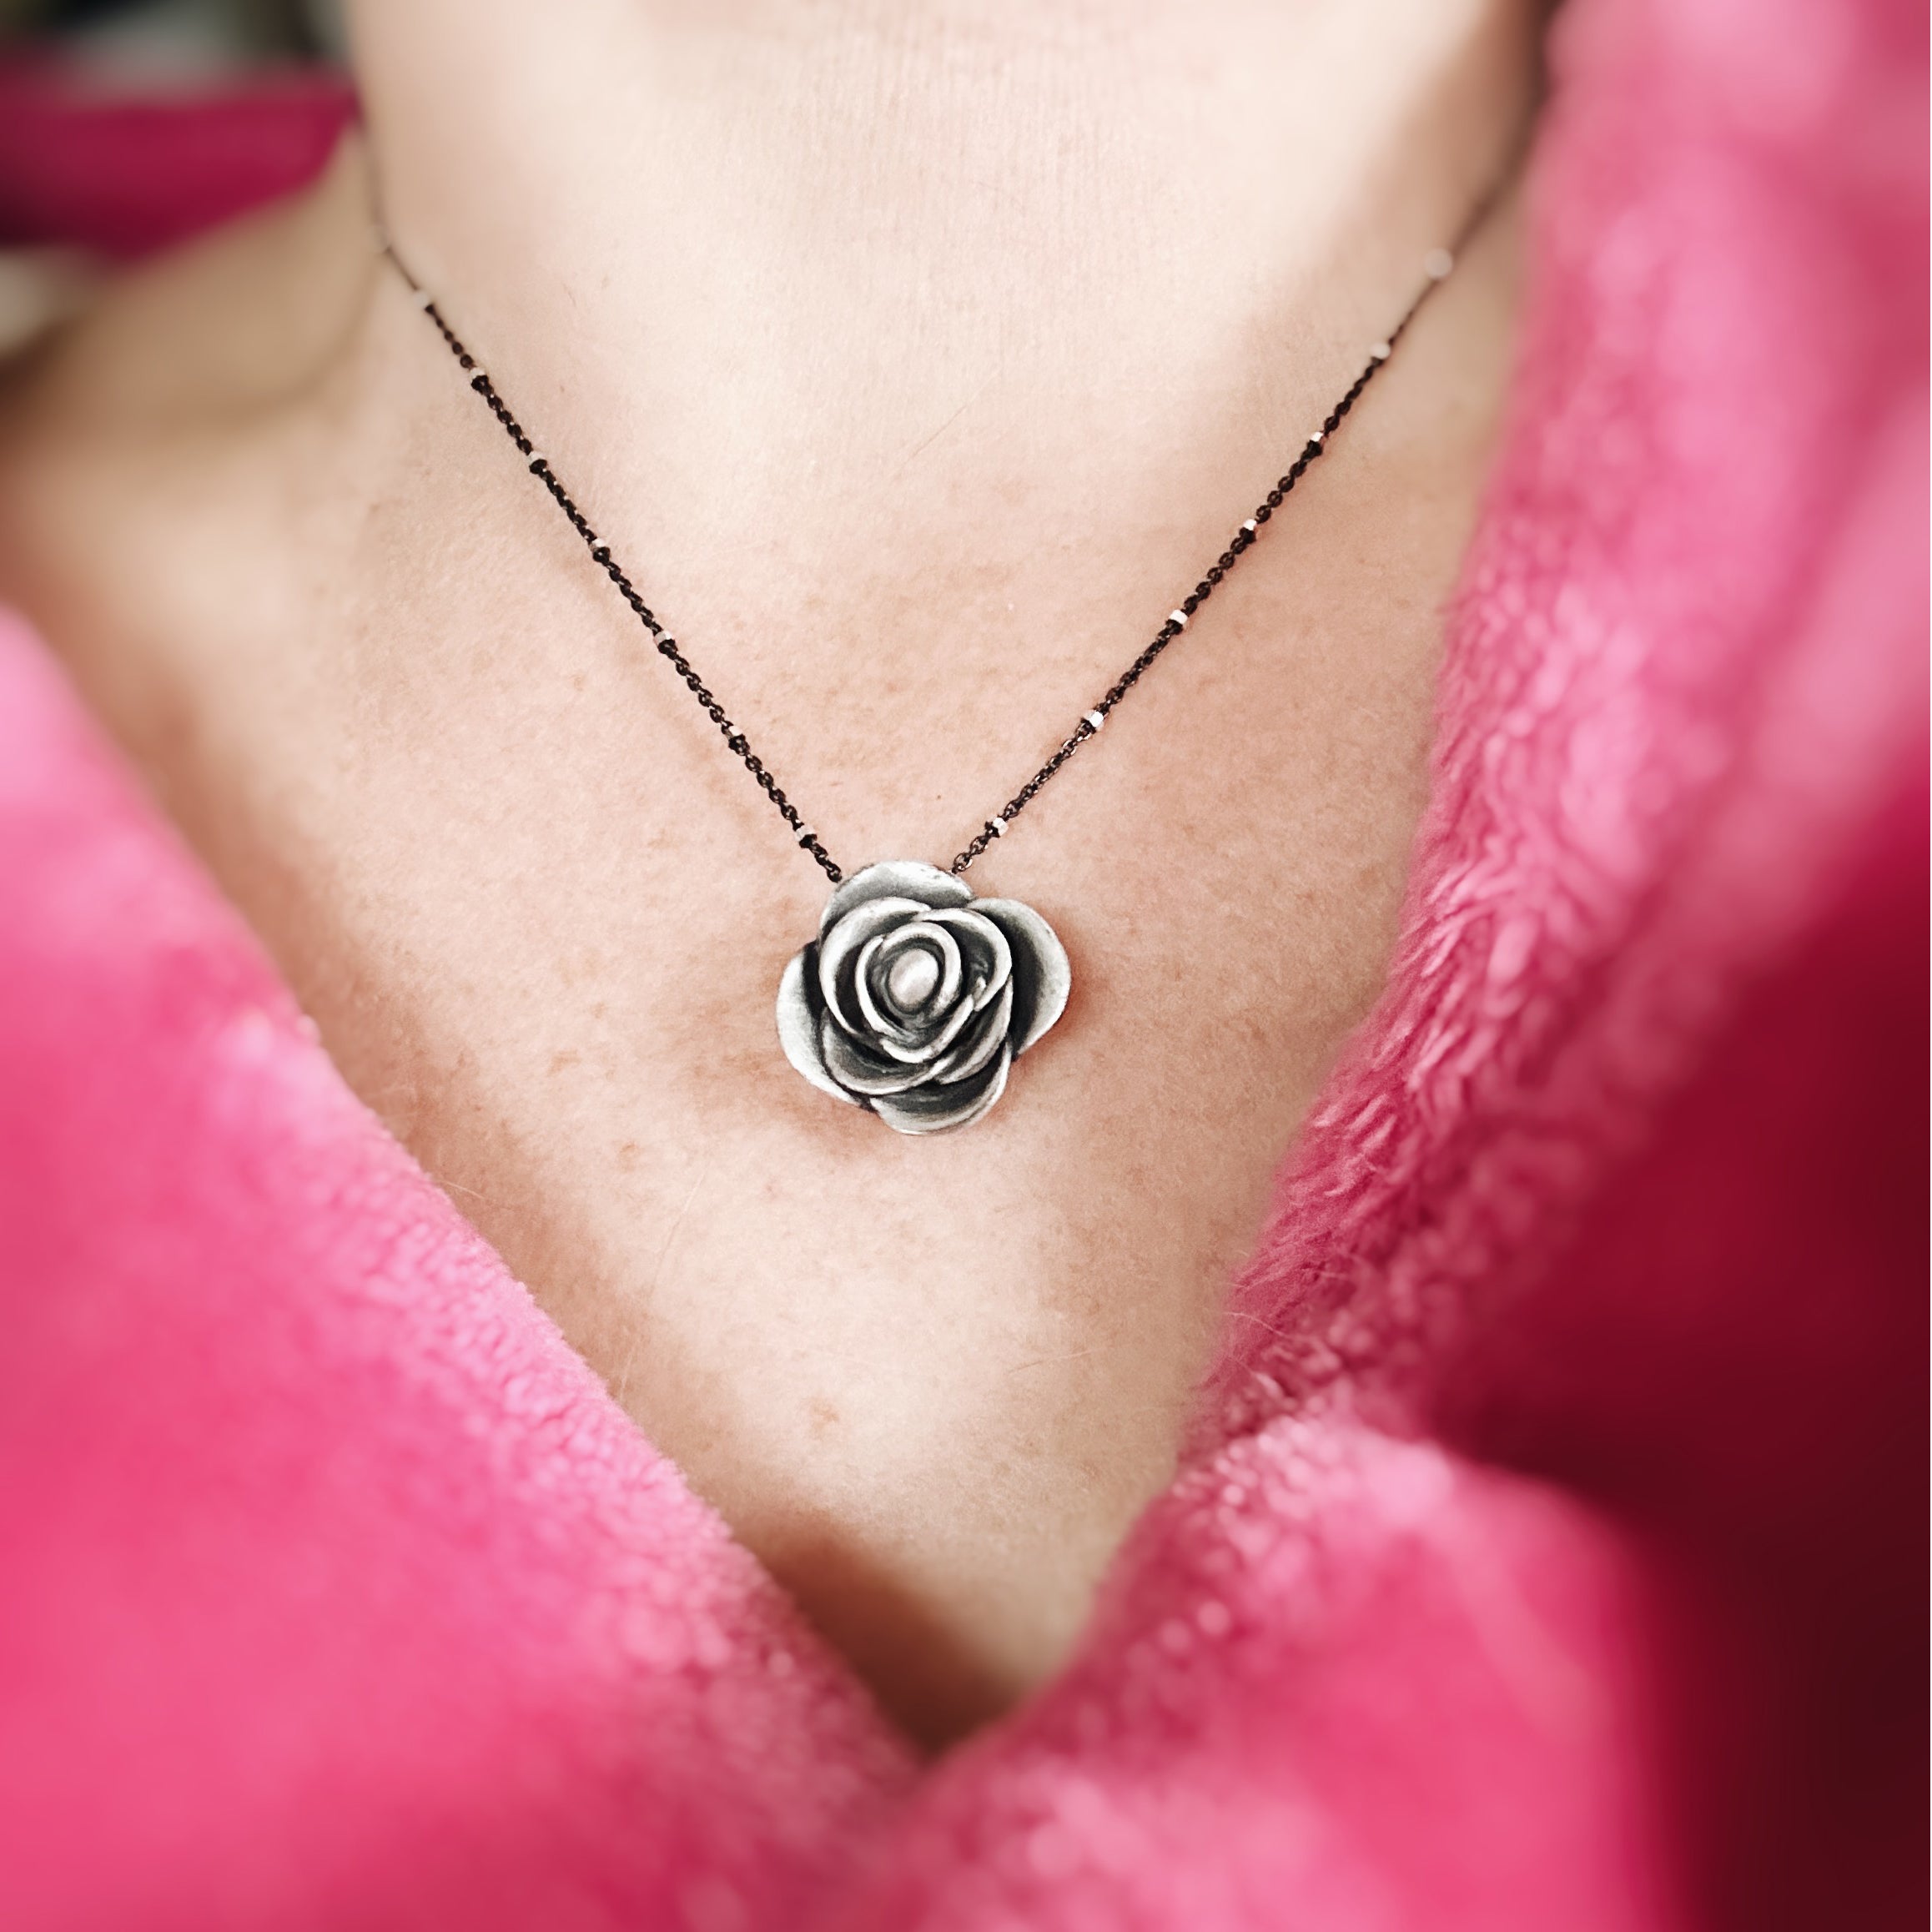 Artisan Silver Hand Sculpted Rose Pendant Necklace, Medium 18mm